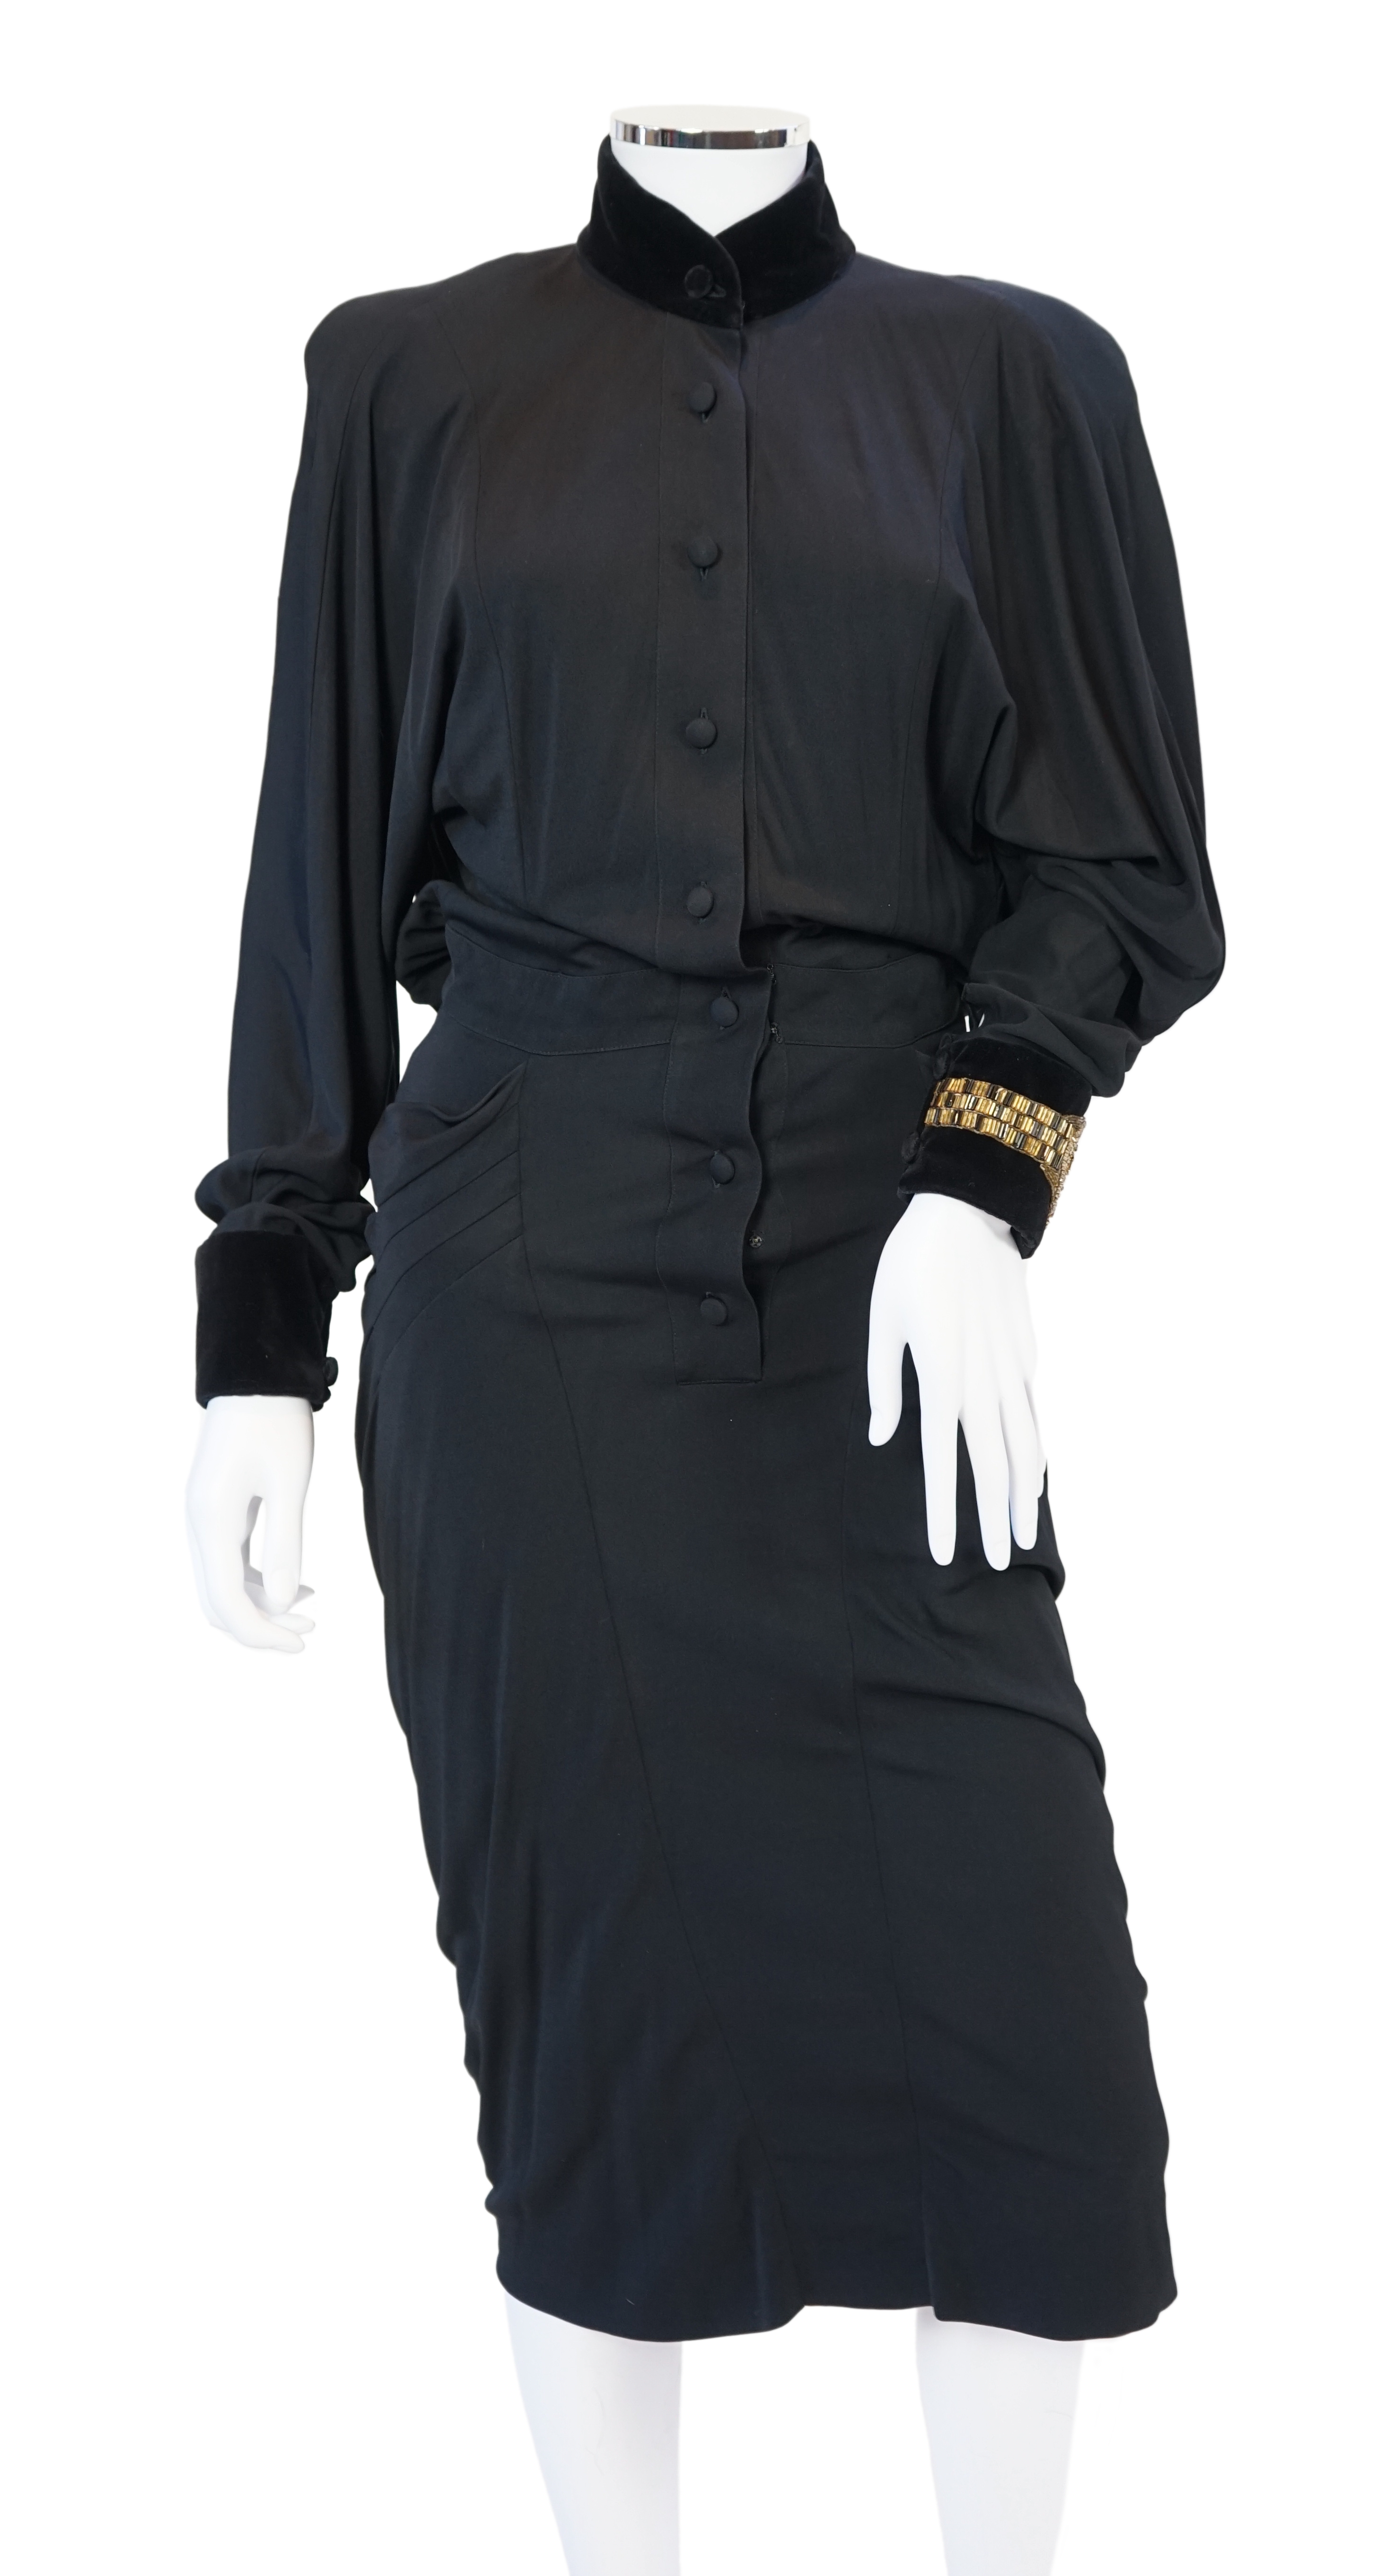 A Karl Lagerfeld black evening dress, size EU 38